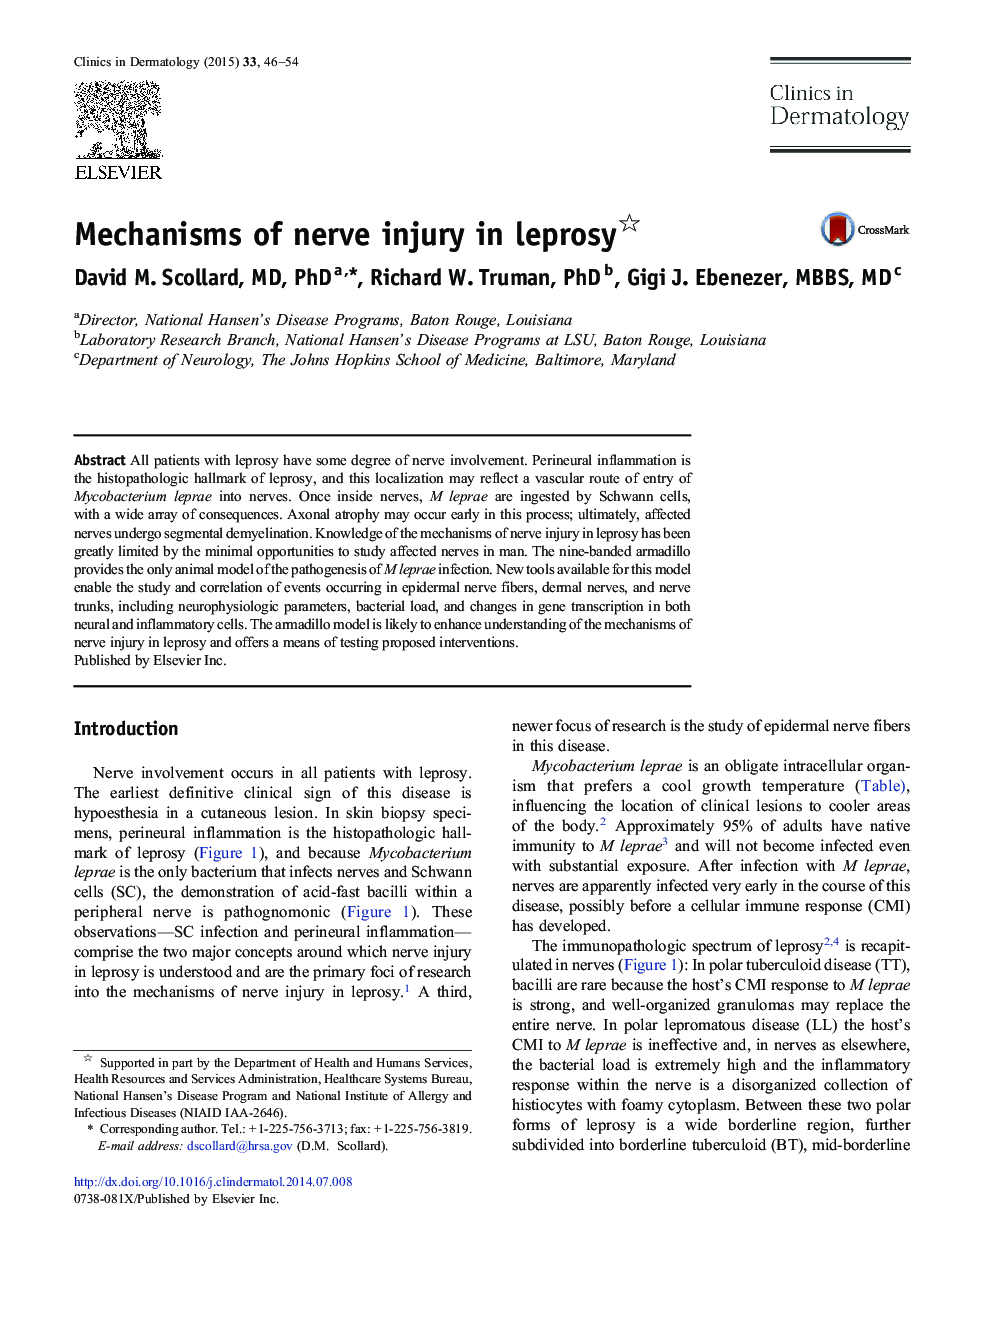 Mechanisms of nerve injury in leprosy 